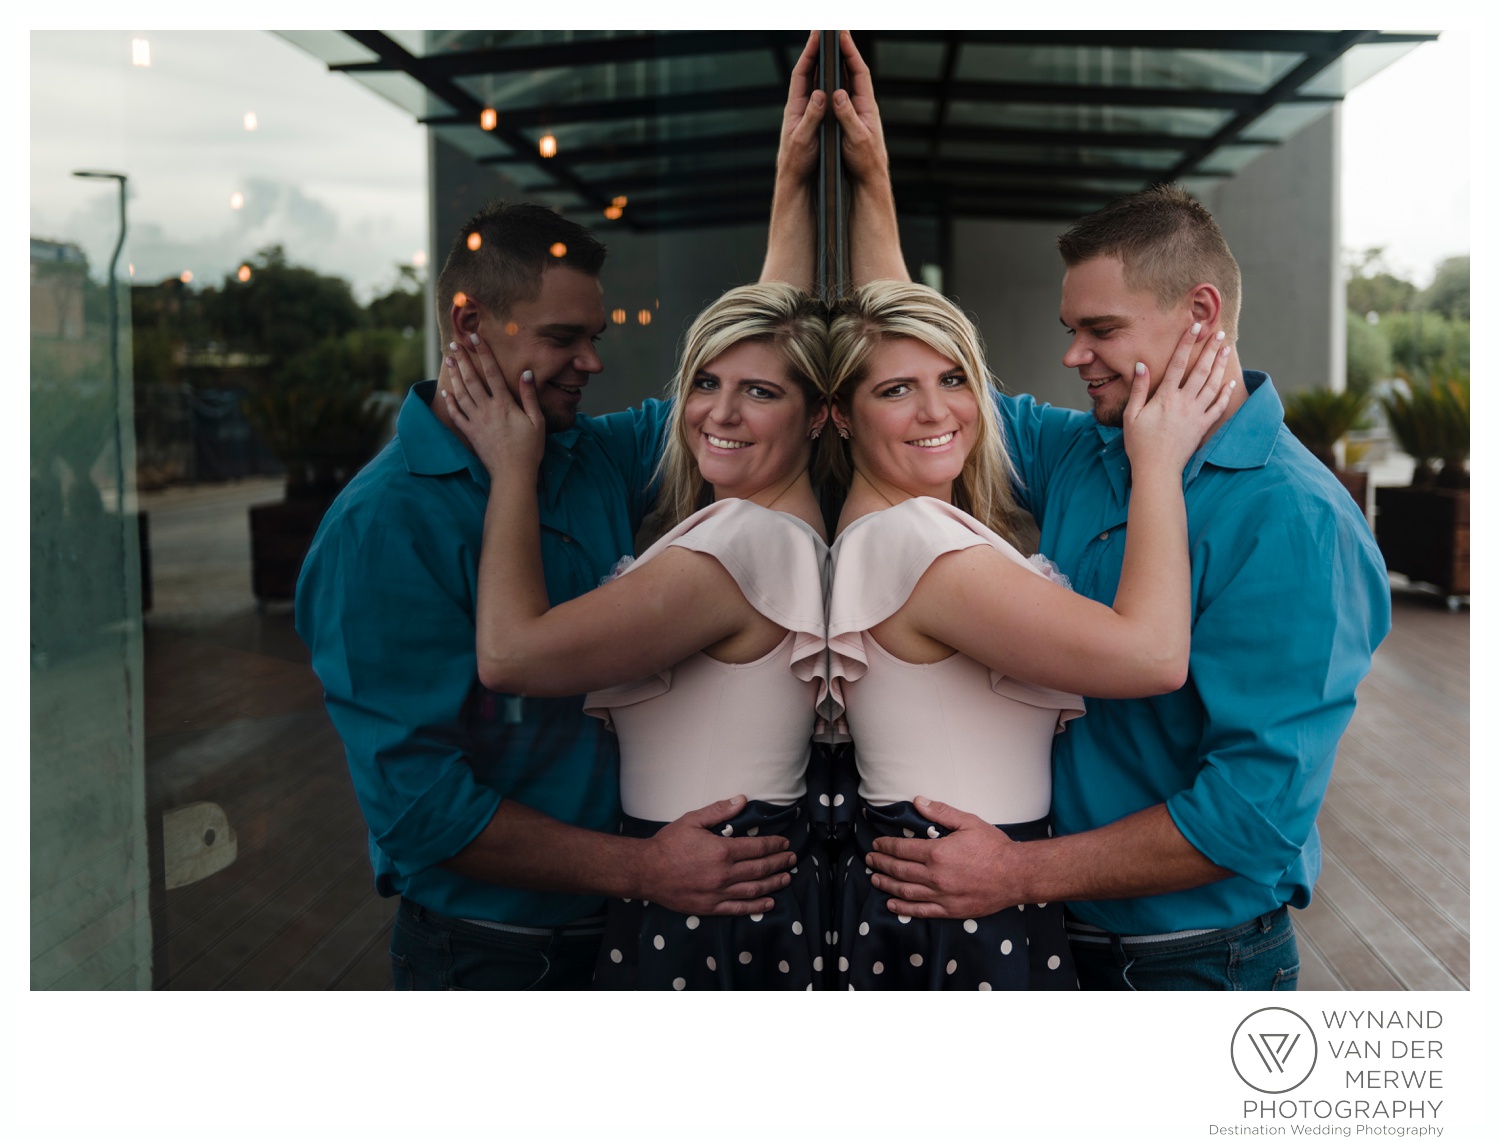 WynandvanderMerwe_weddingphotography_engagementshoot_icoffeeworks_industrial_romandityronne_gauteng_2018-45.jpg